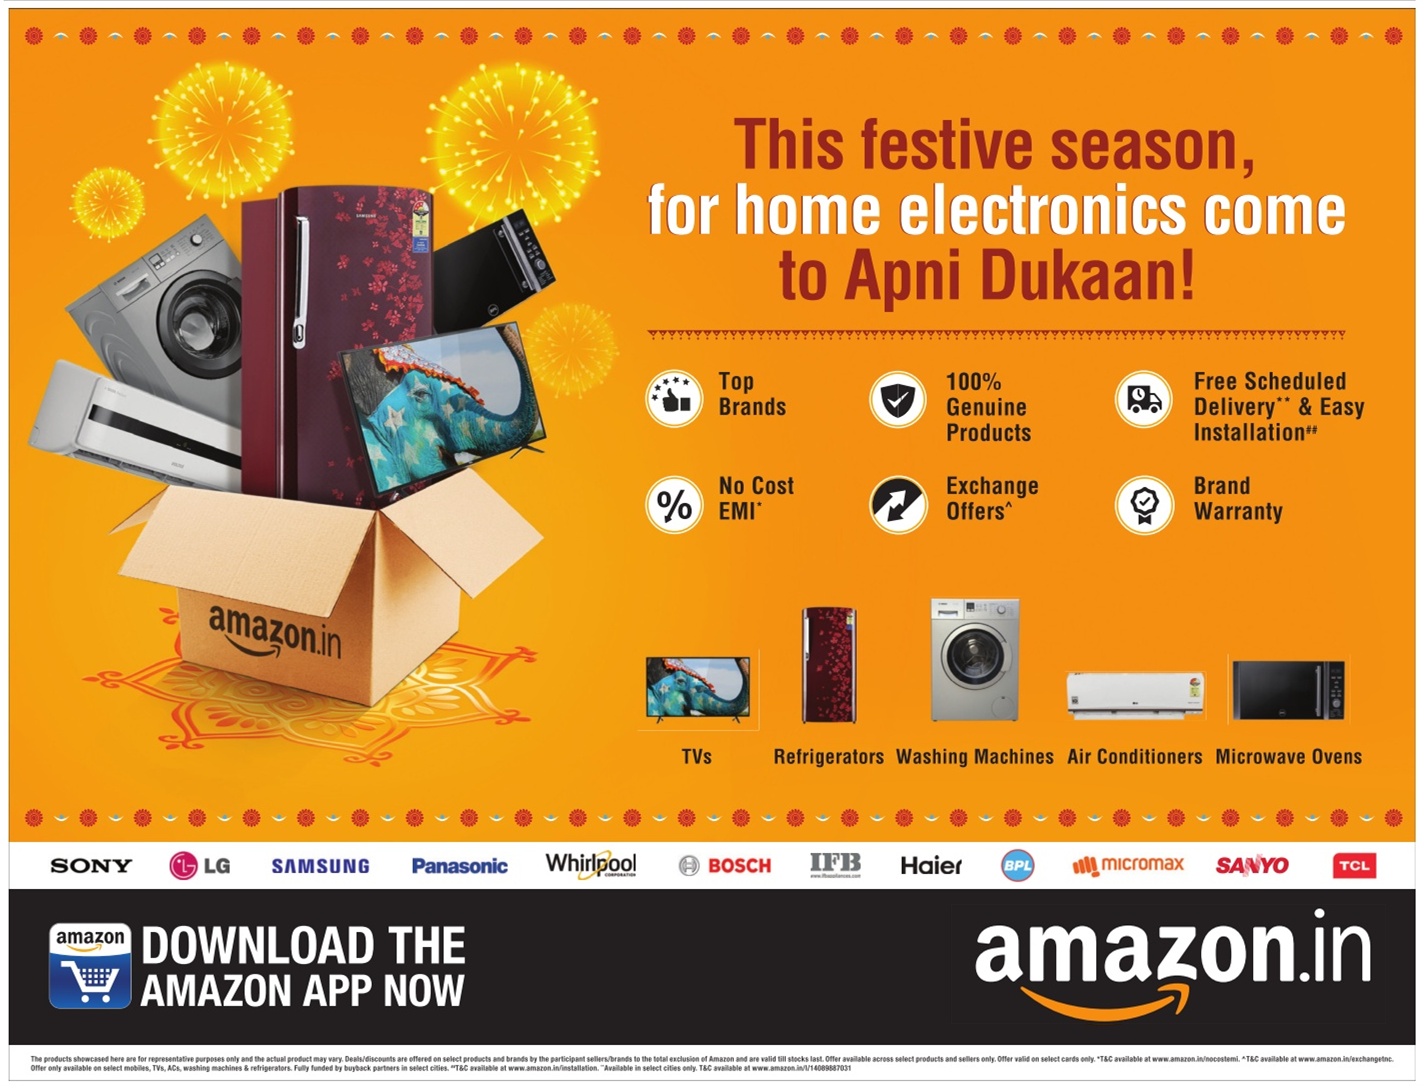 Amazon This Festive Season For Home Electronics Come To Apni Dukaan Ad